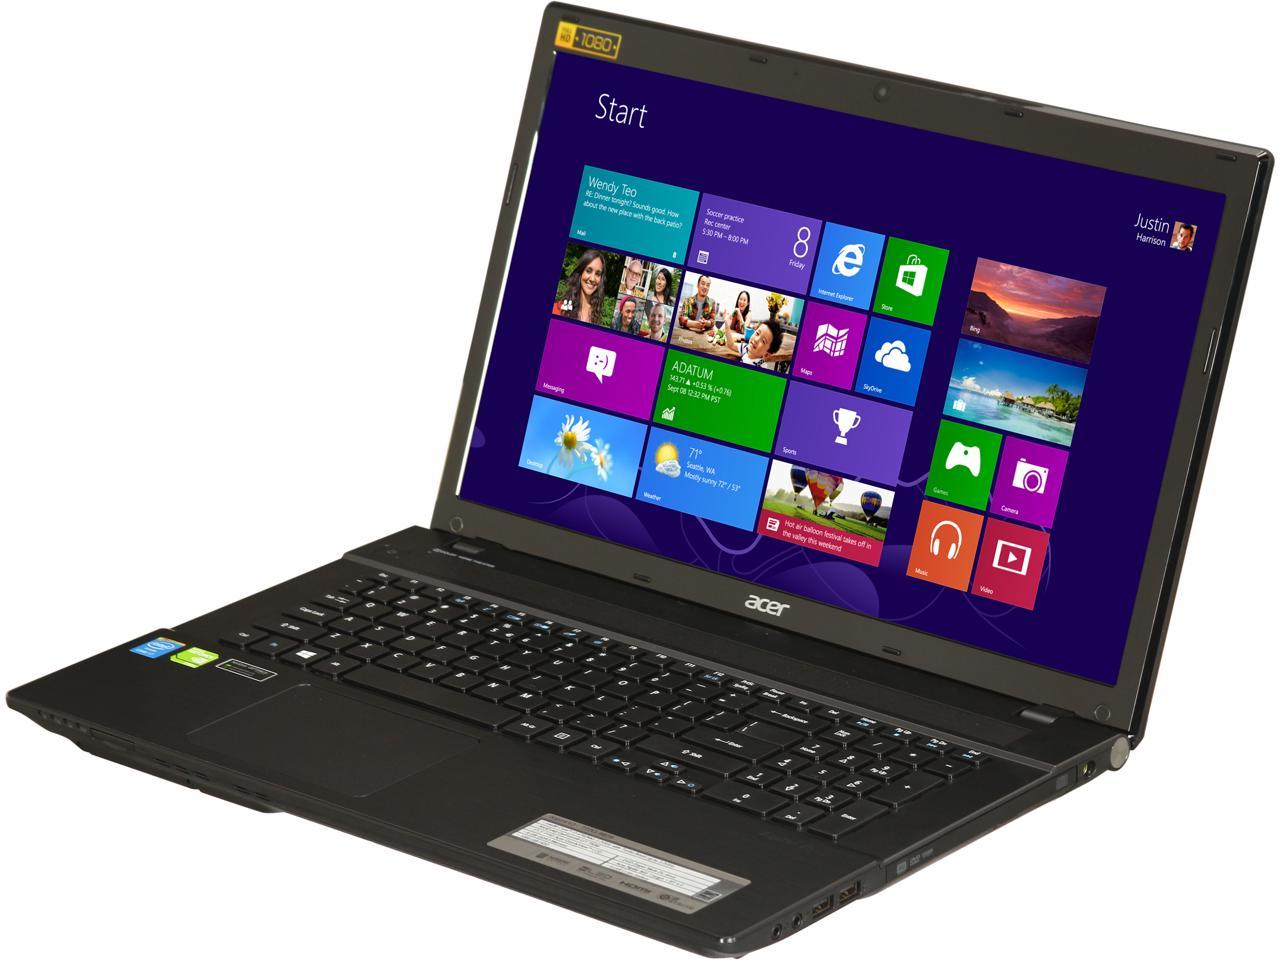 Acer V3 772g 99 Gaming Laptop Intel Core I7 4702mq 2 2ghz 17 3 Windows 8 Newegg Com